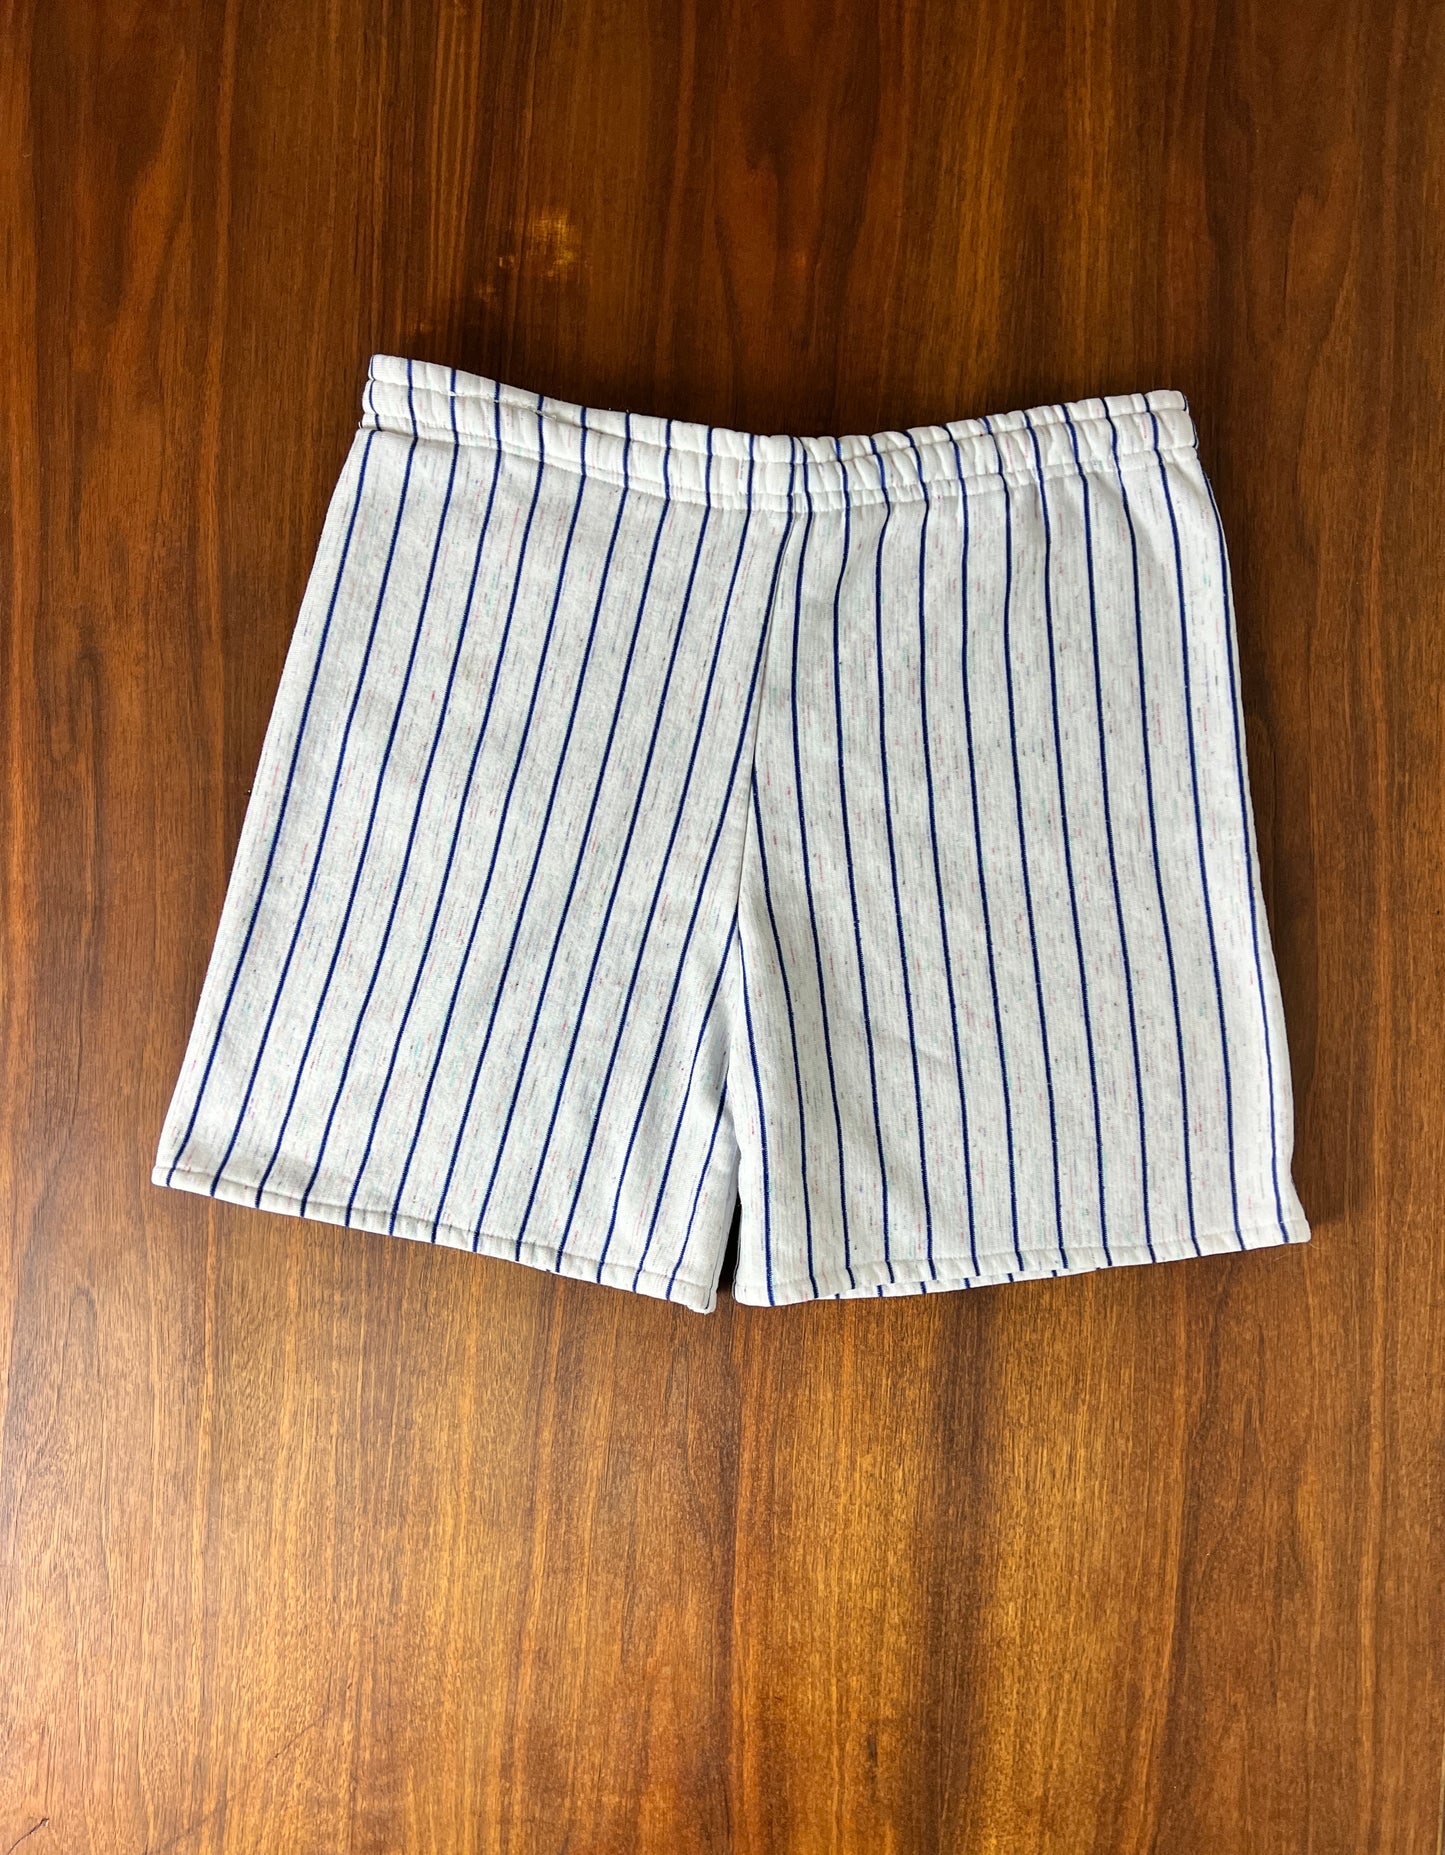 Vintage 80’s basketball shorts